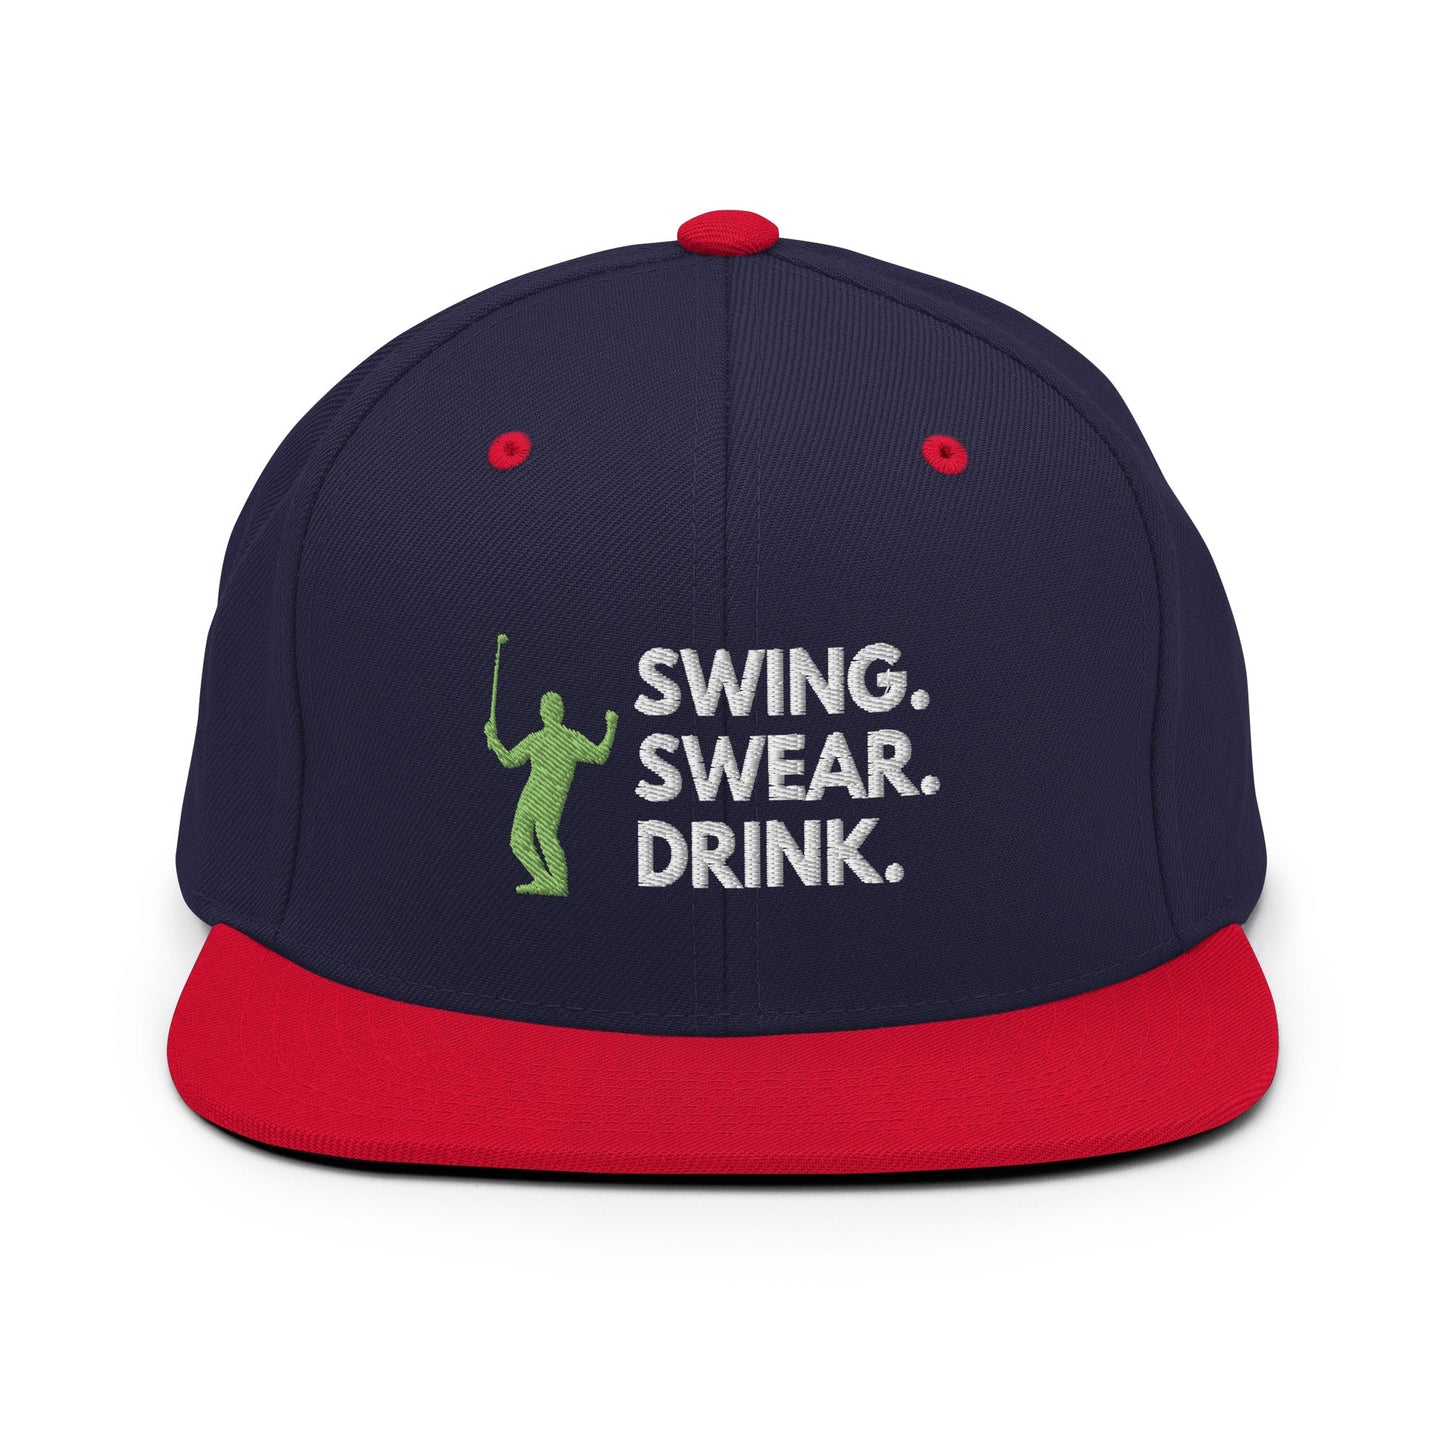 Funny Golfer Gifts  Snapback Hat Navy/ Red Swing. Swear. Drink Snapback Hat